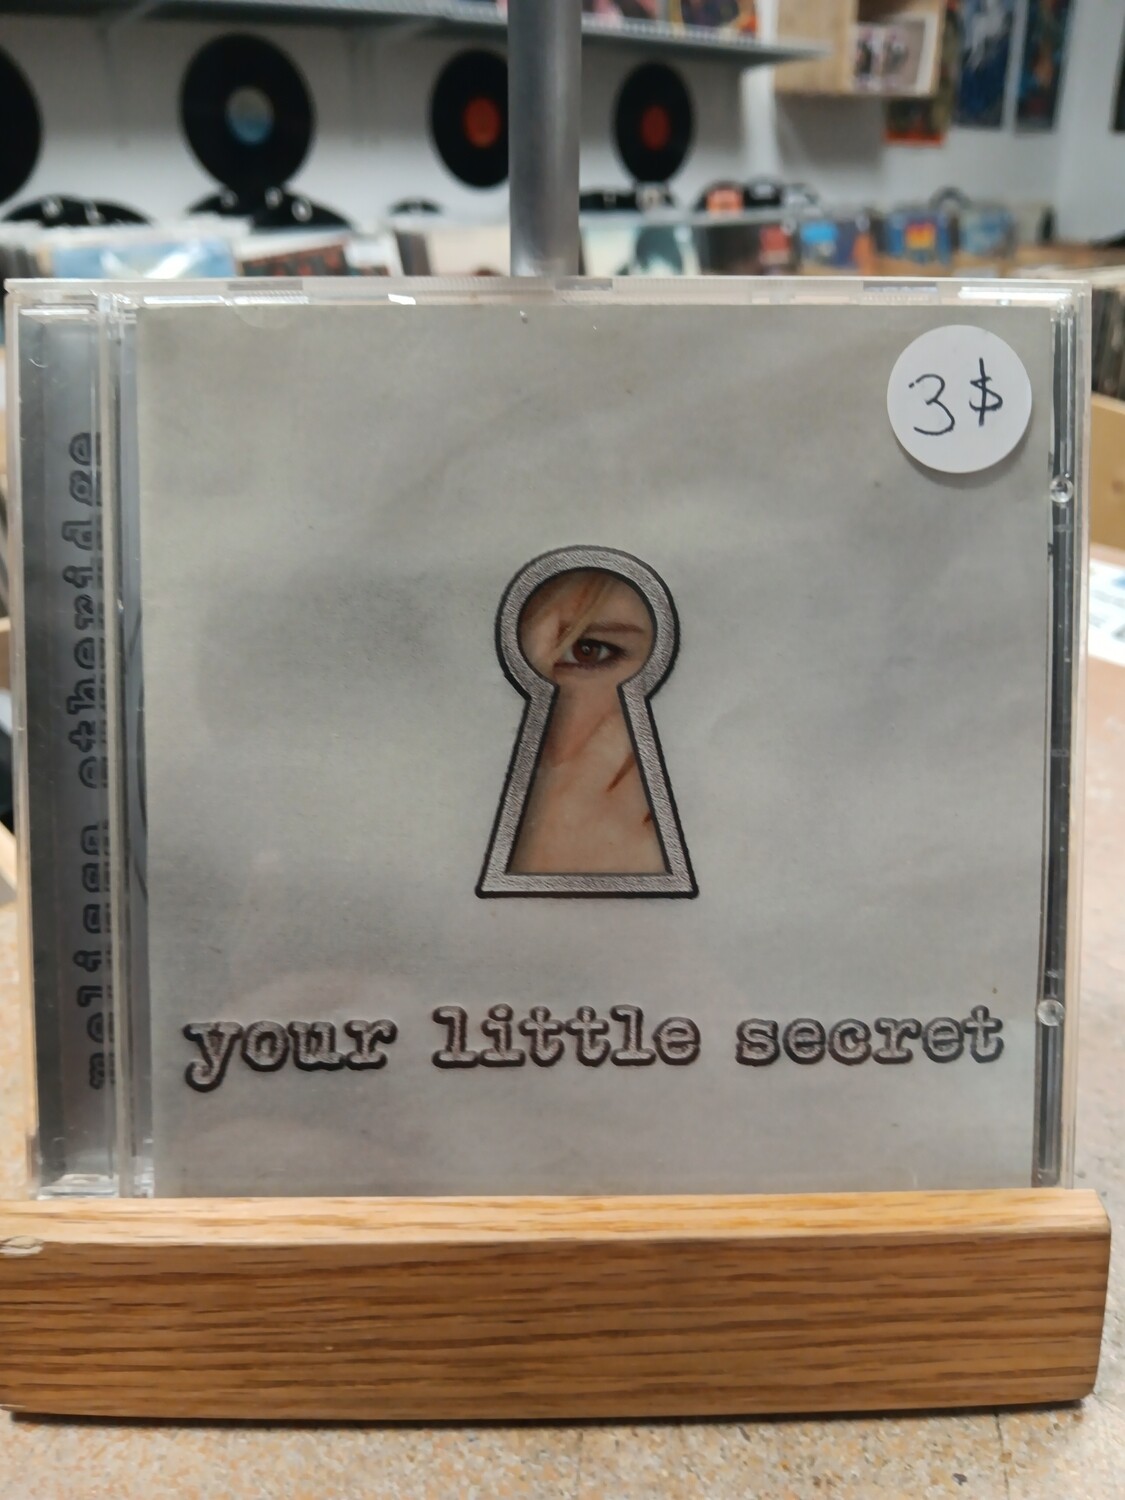 Melissa Etheridge - Your little secret (CD)